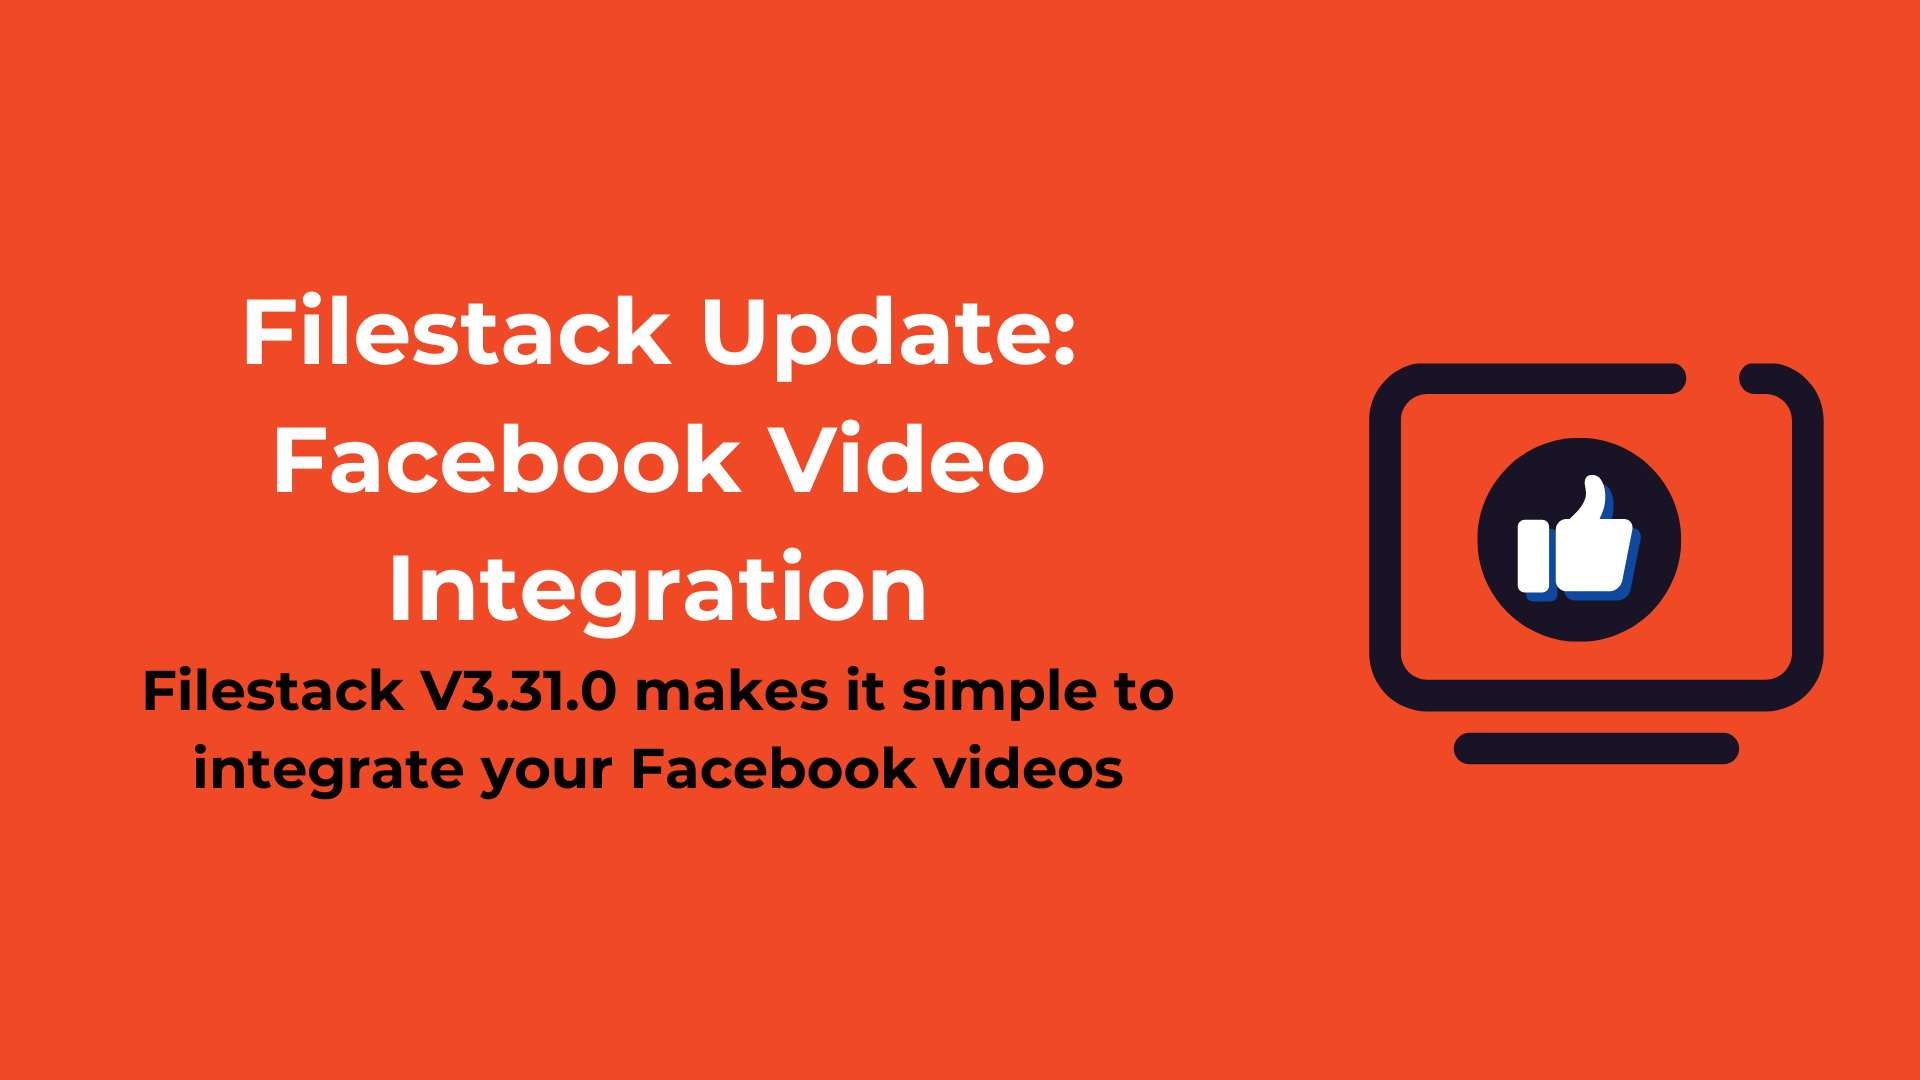 Facebook Video Integration